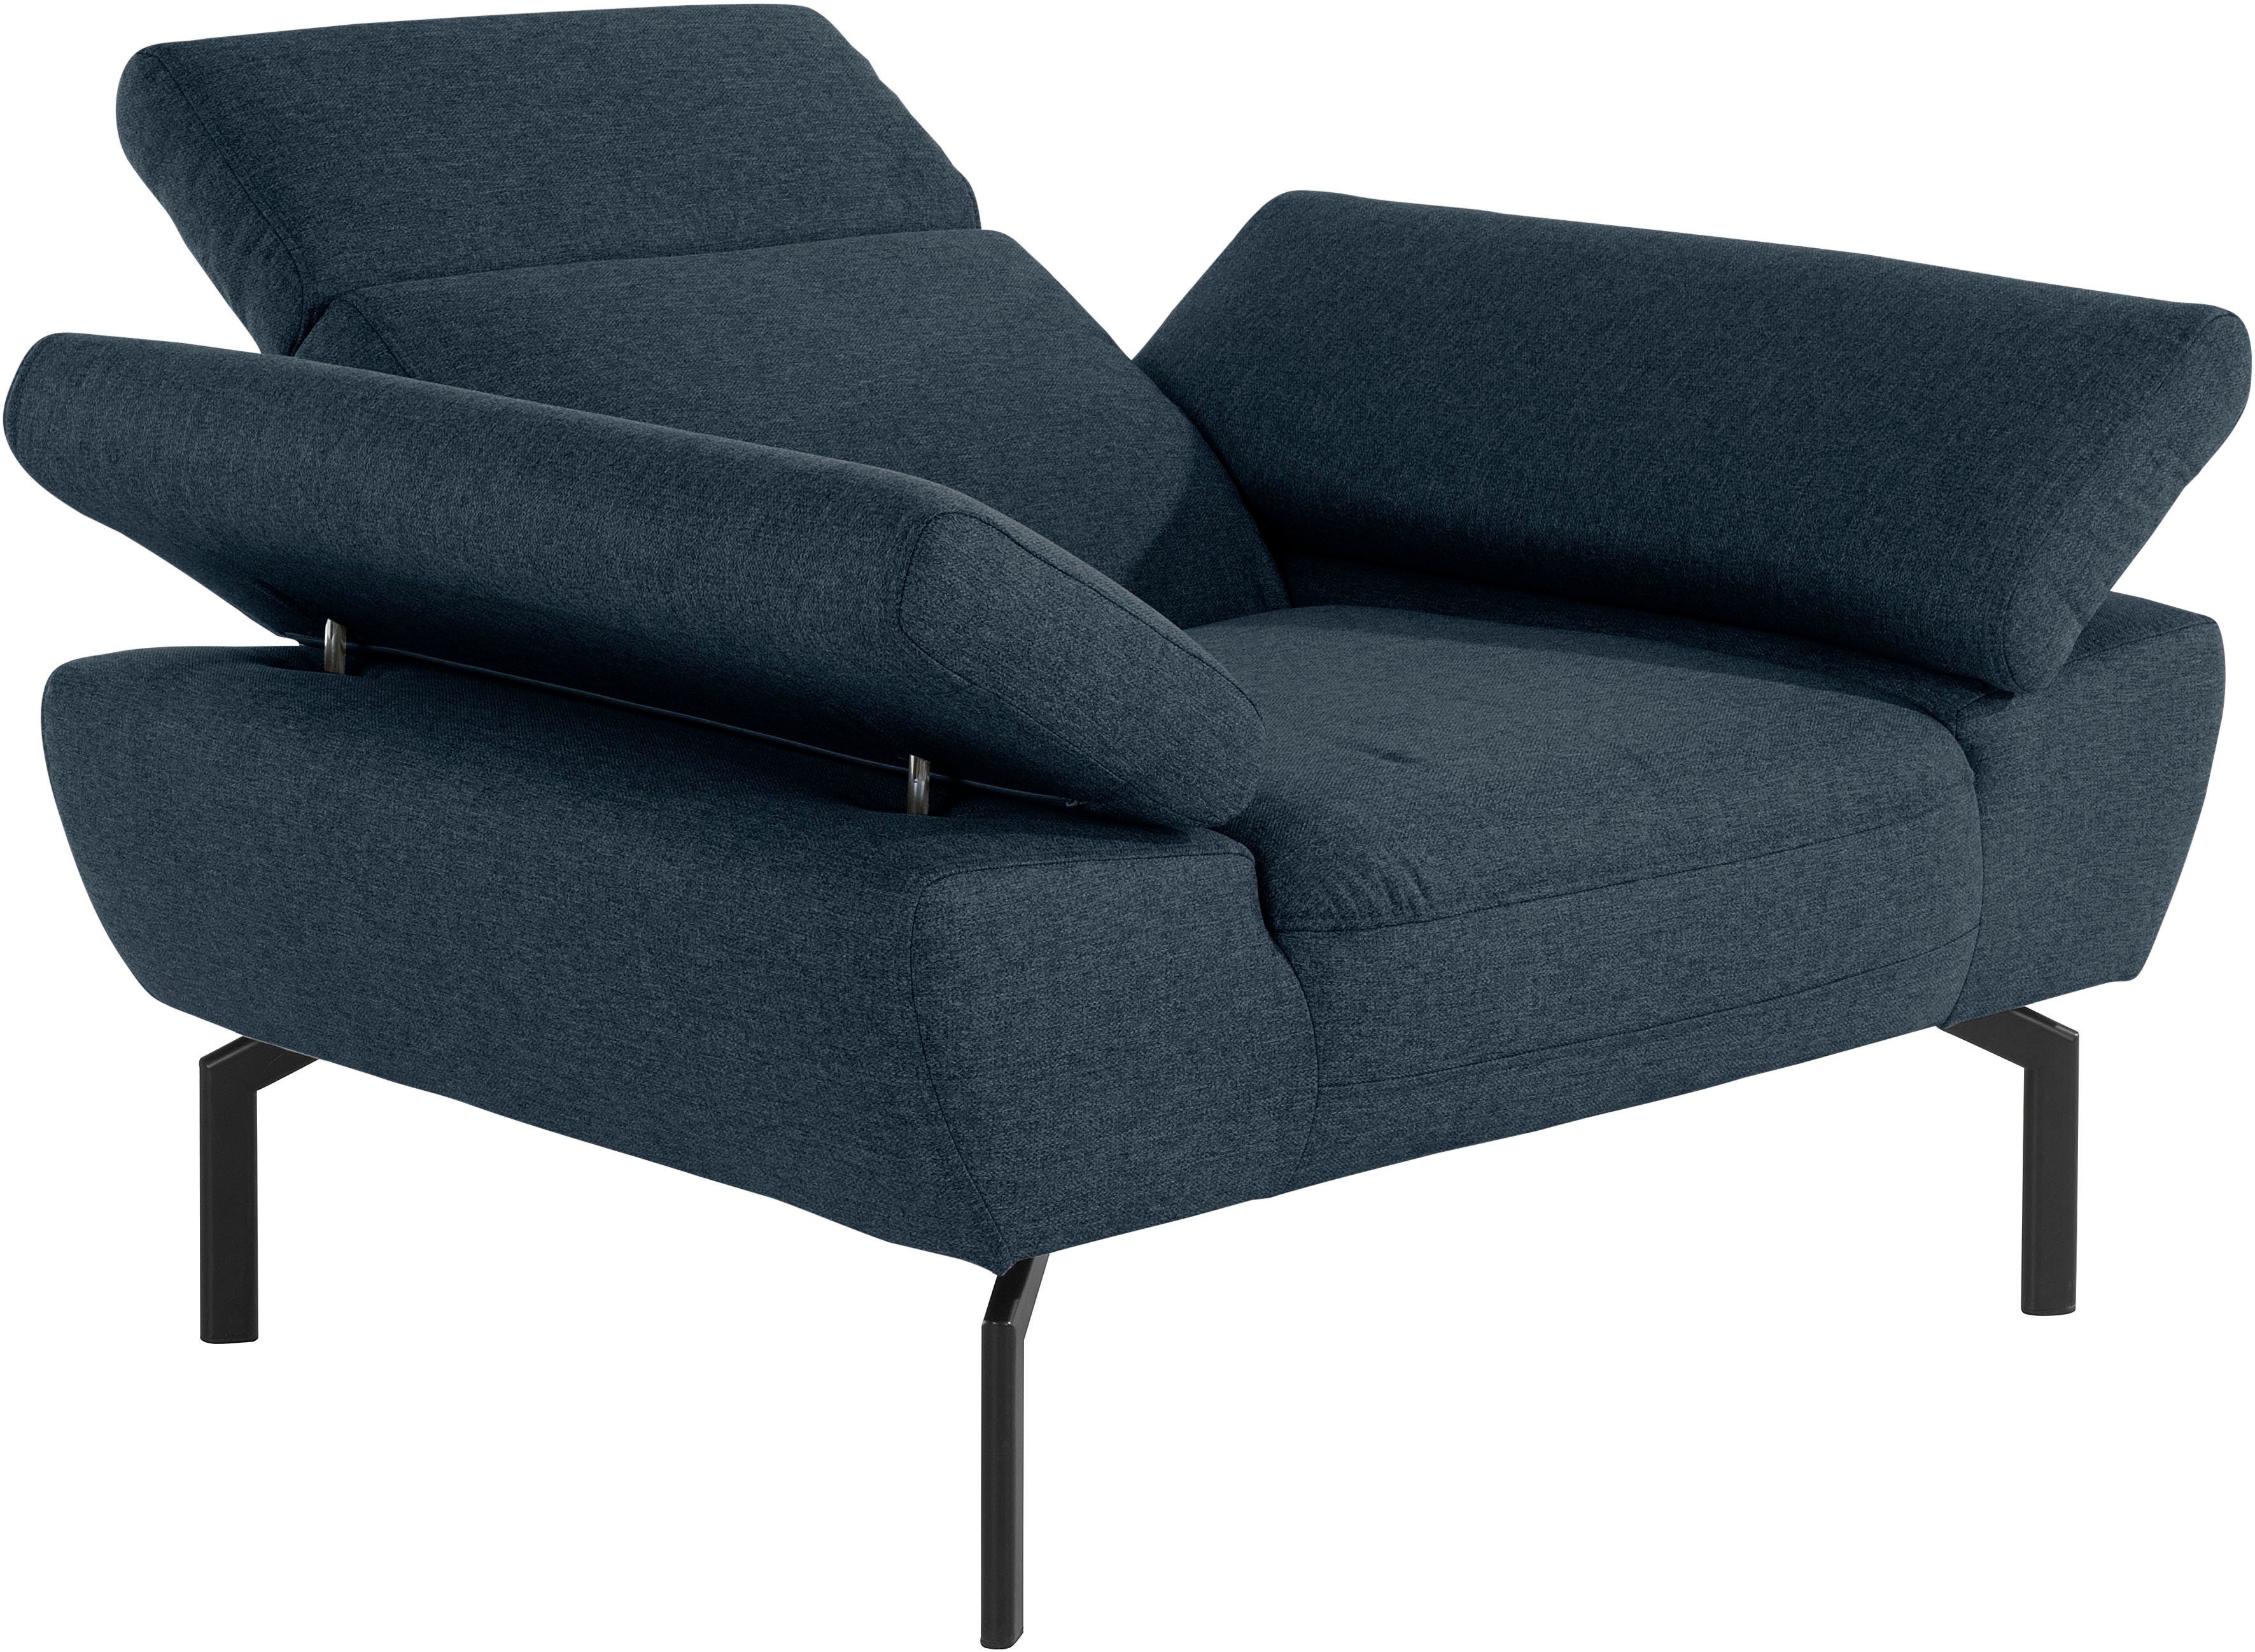 Places of Style Sessel Trapino in Luxus-Microfaser Rückenverstellung, wahlweise Lederoptik Luxus, mit